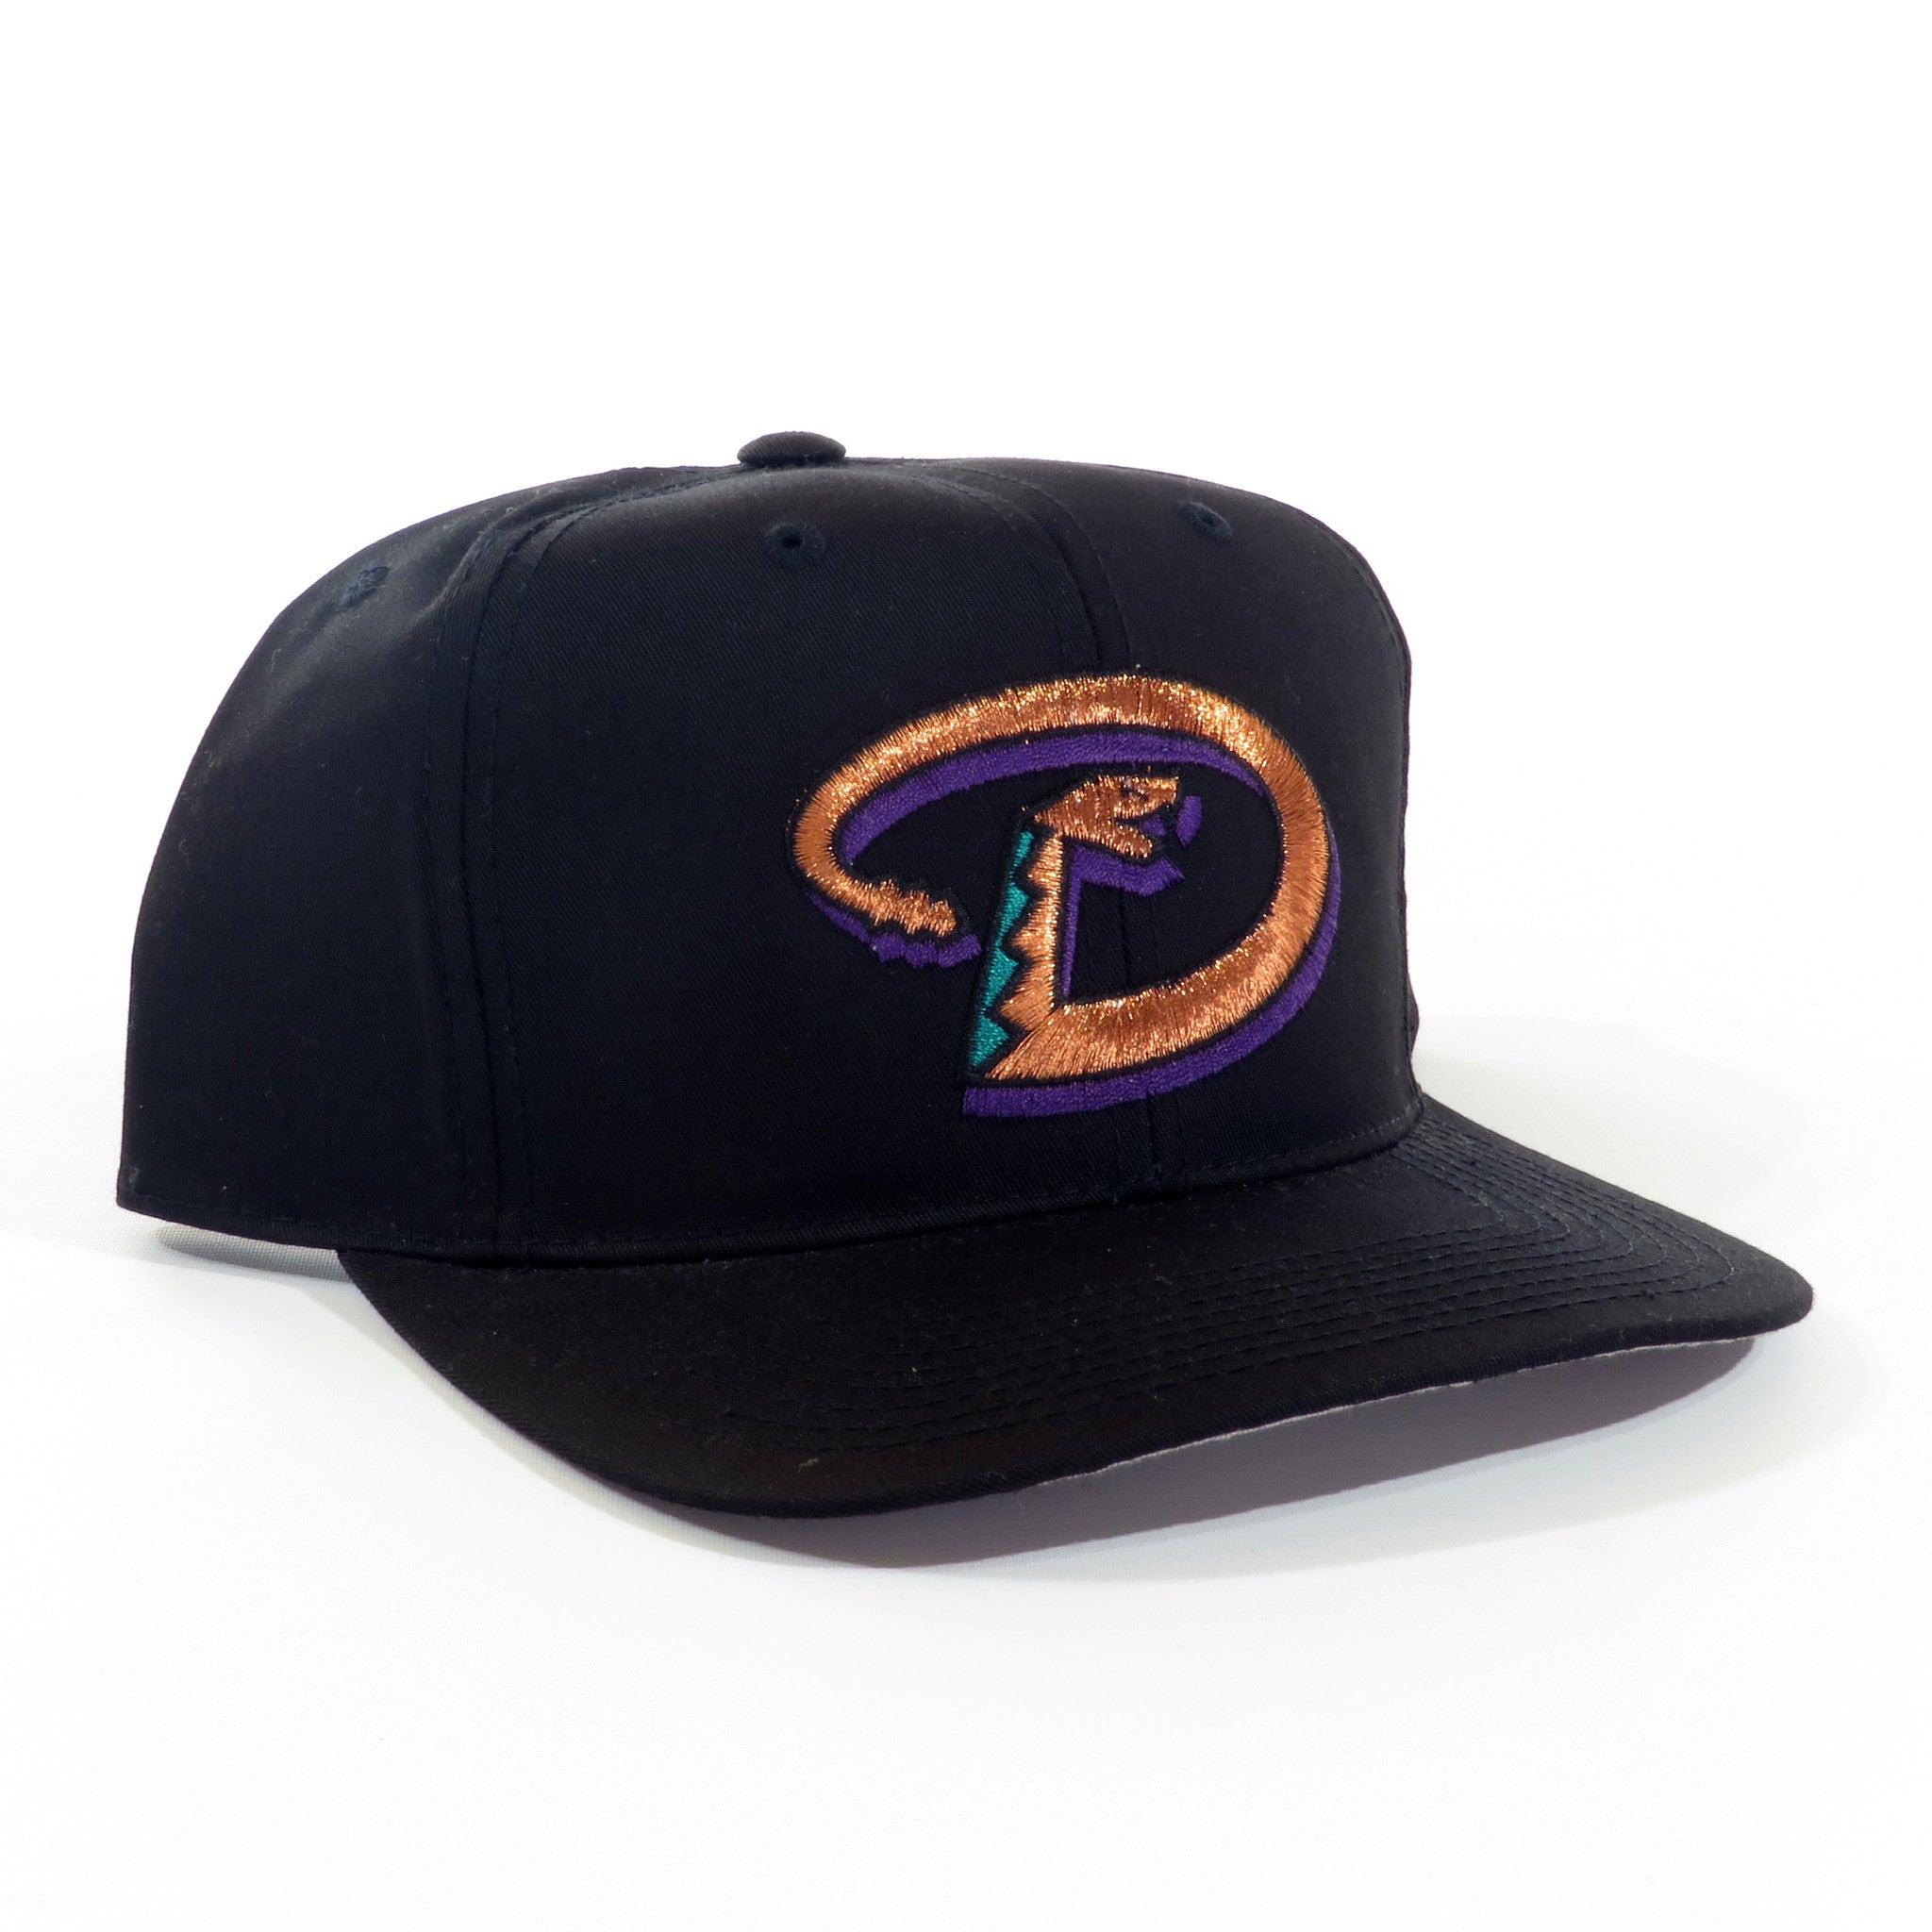 Arizona Diamondbacks Snapback Hat